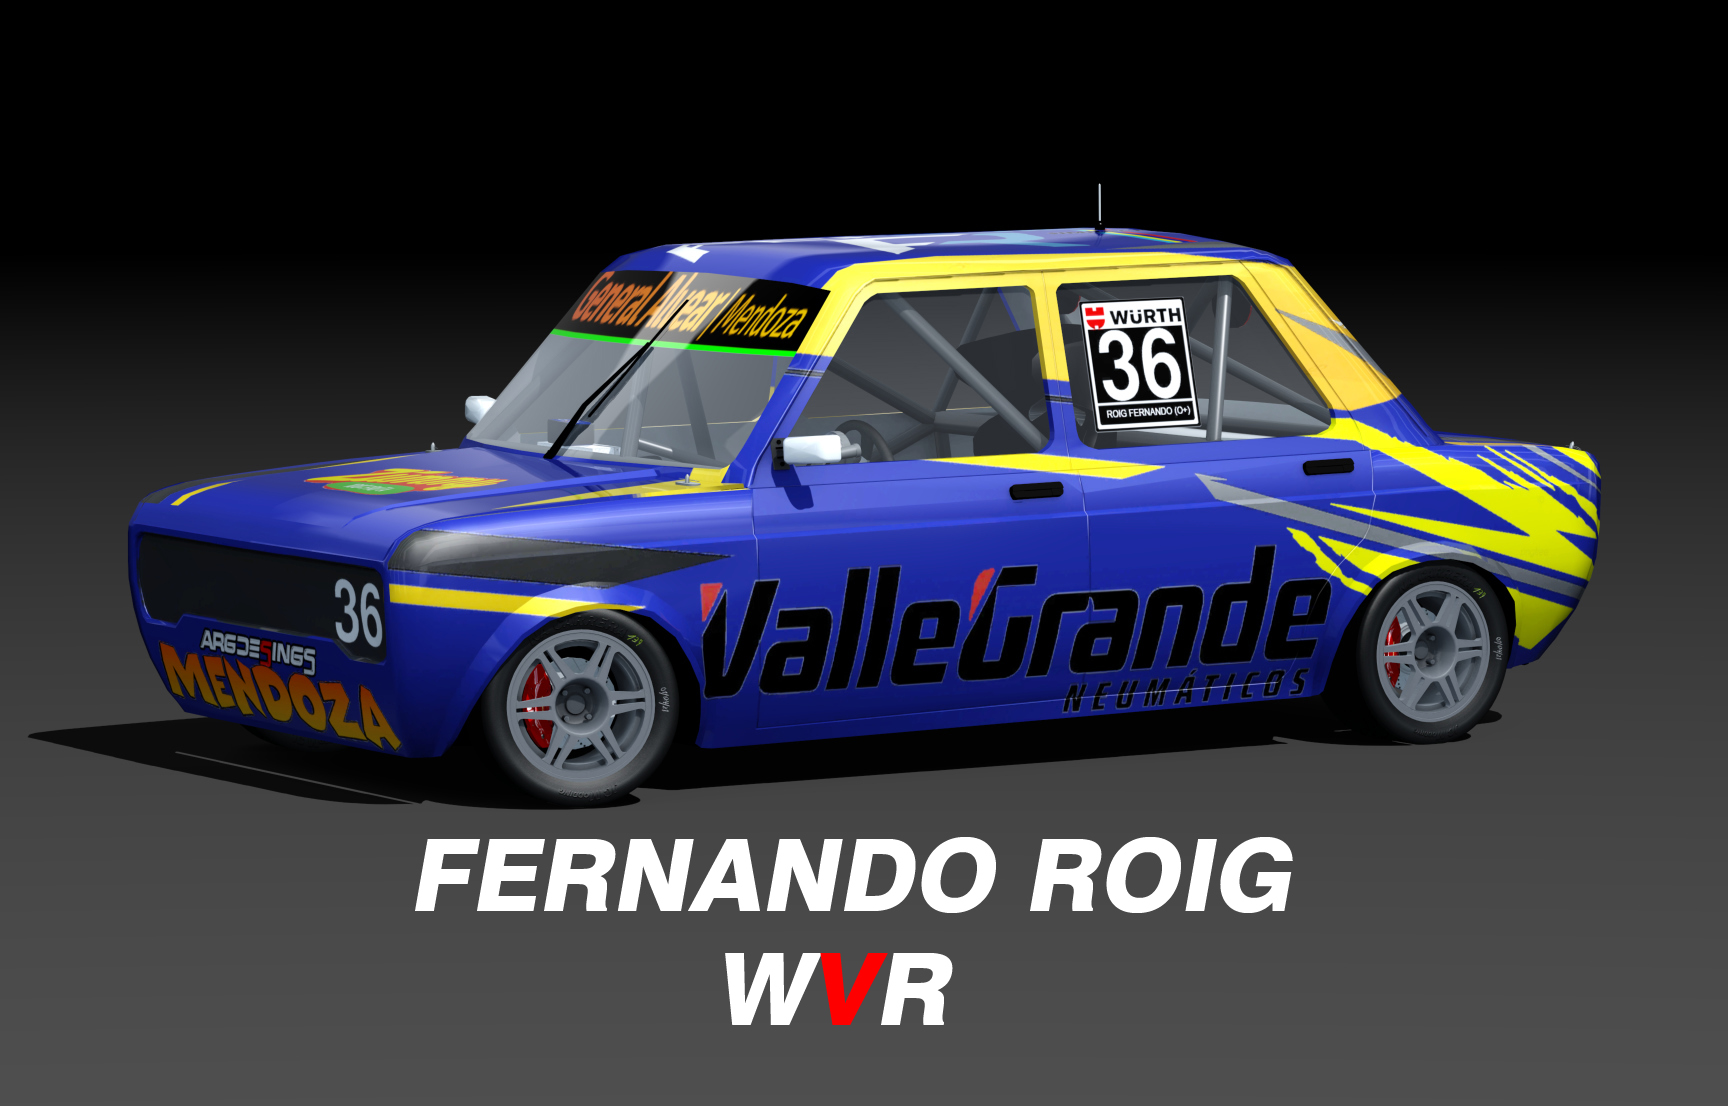 WVR Turismo 1.4 FIAT 128, skin fernando roig